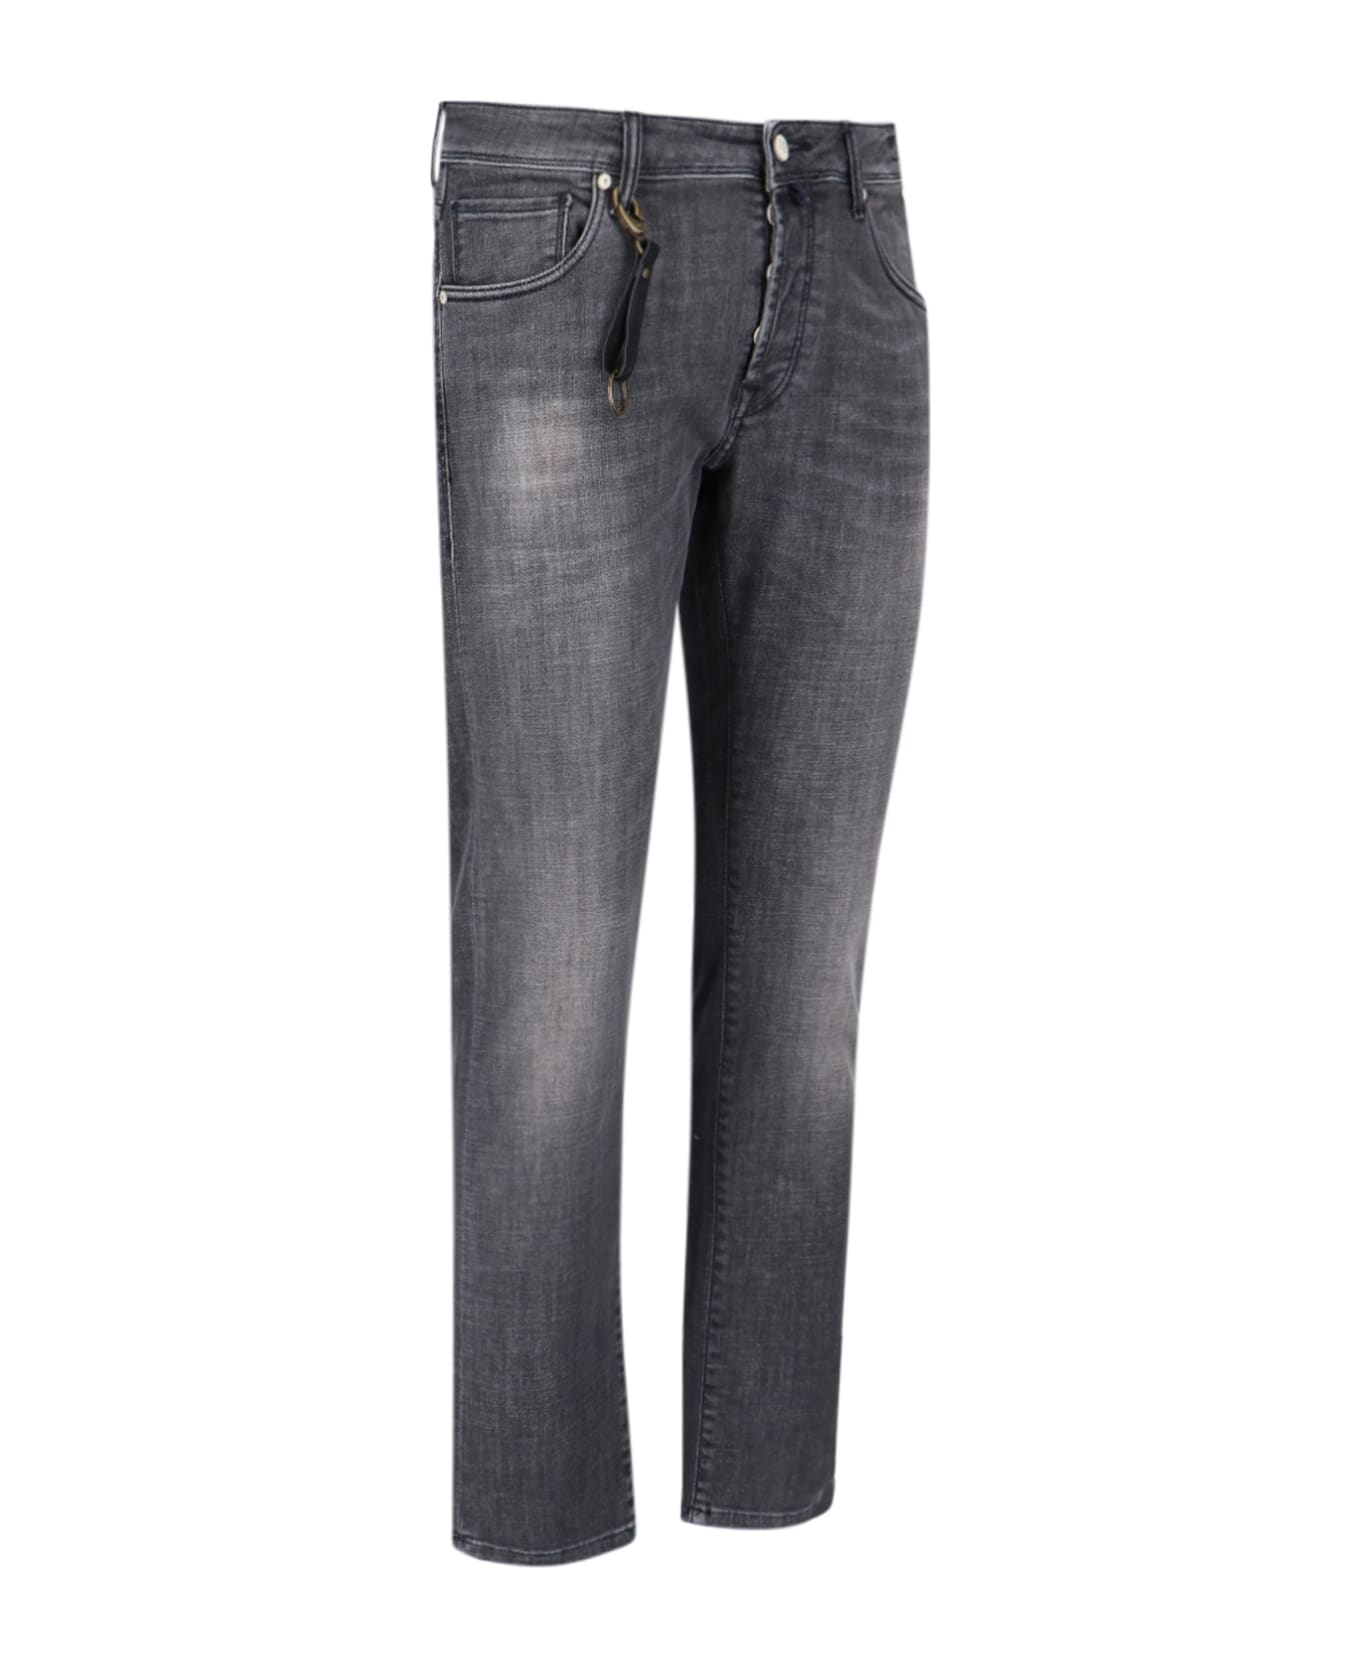 Incotex Blue Division Jeans - Gray